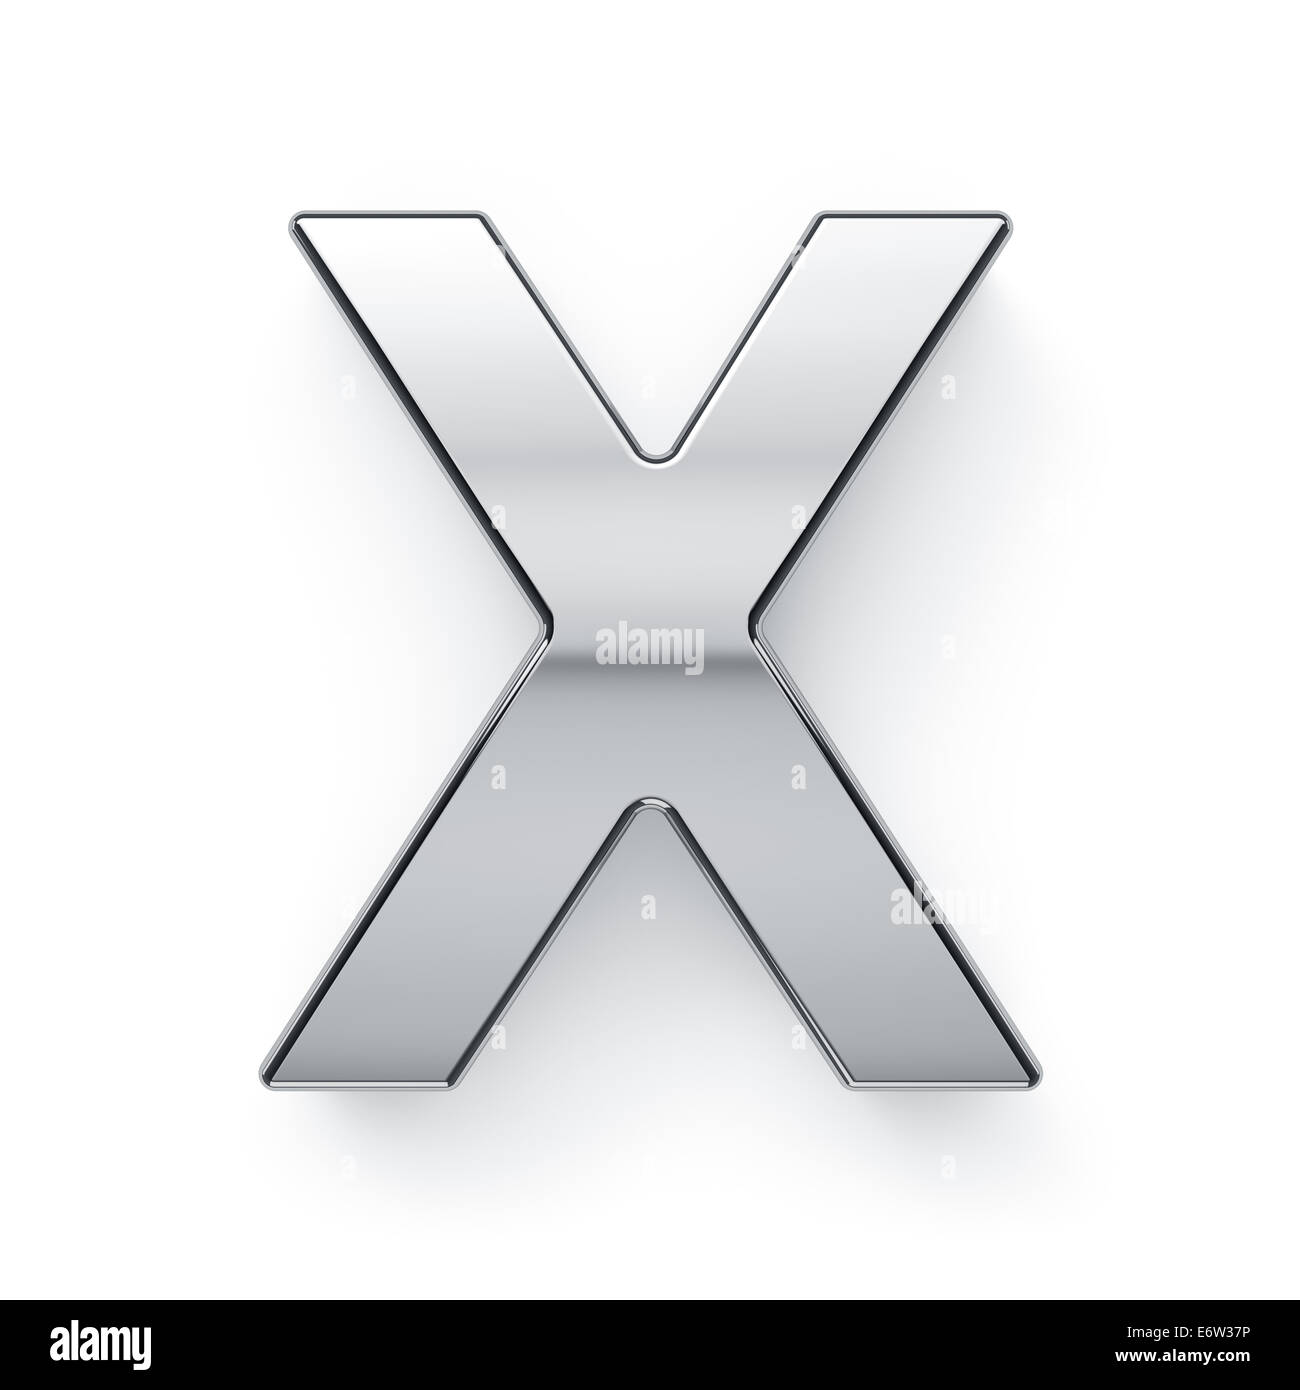 3d render of metallic alphabet letter symbol - X. Isolated on white background Stock Photo